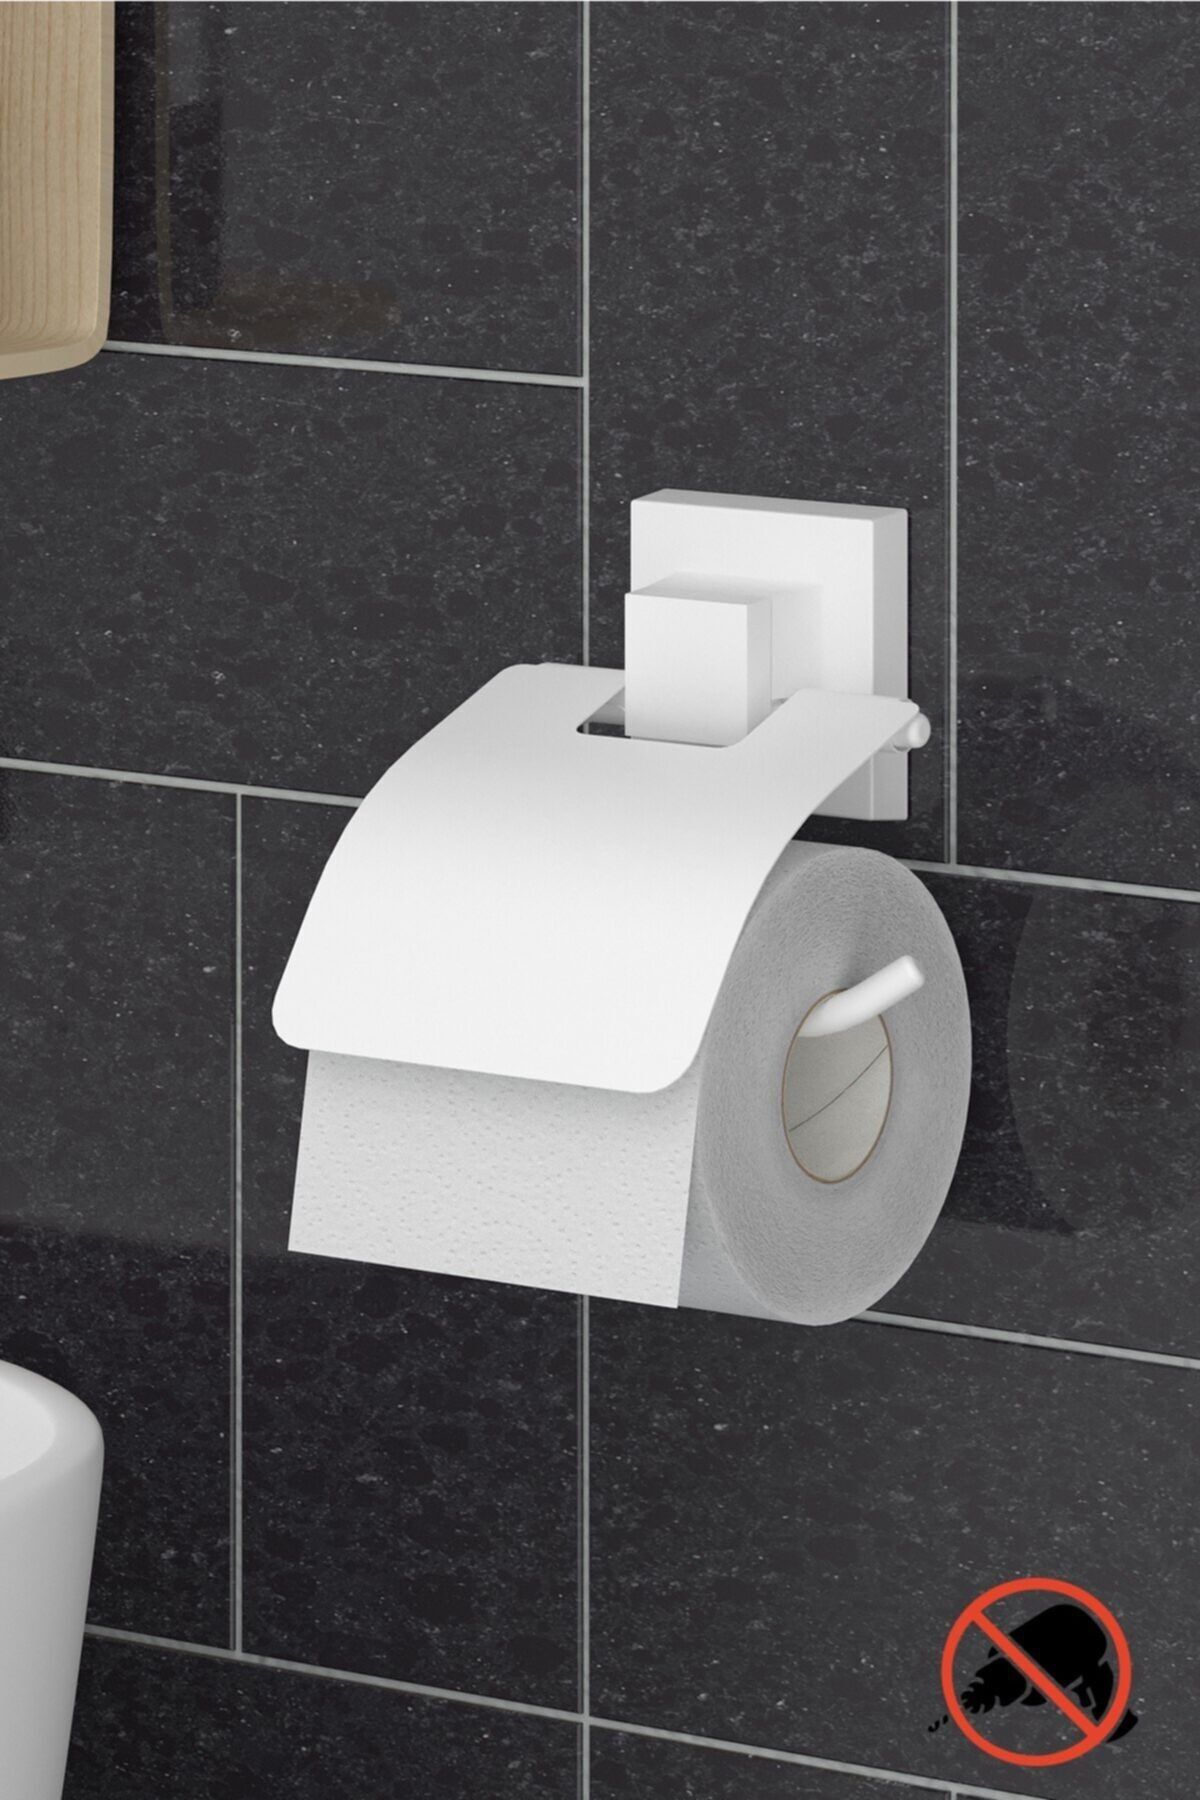 Teknotel Delme Vida Matkap Yok! Easyfıx Yapıskanlı Kapaklı Tuvalet Kağıtlık Beyaz Ef238